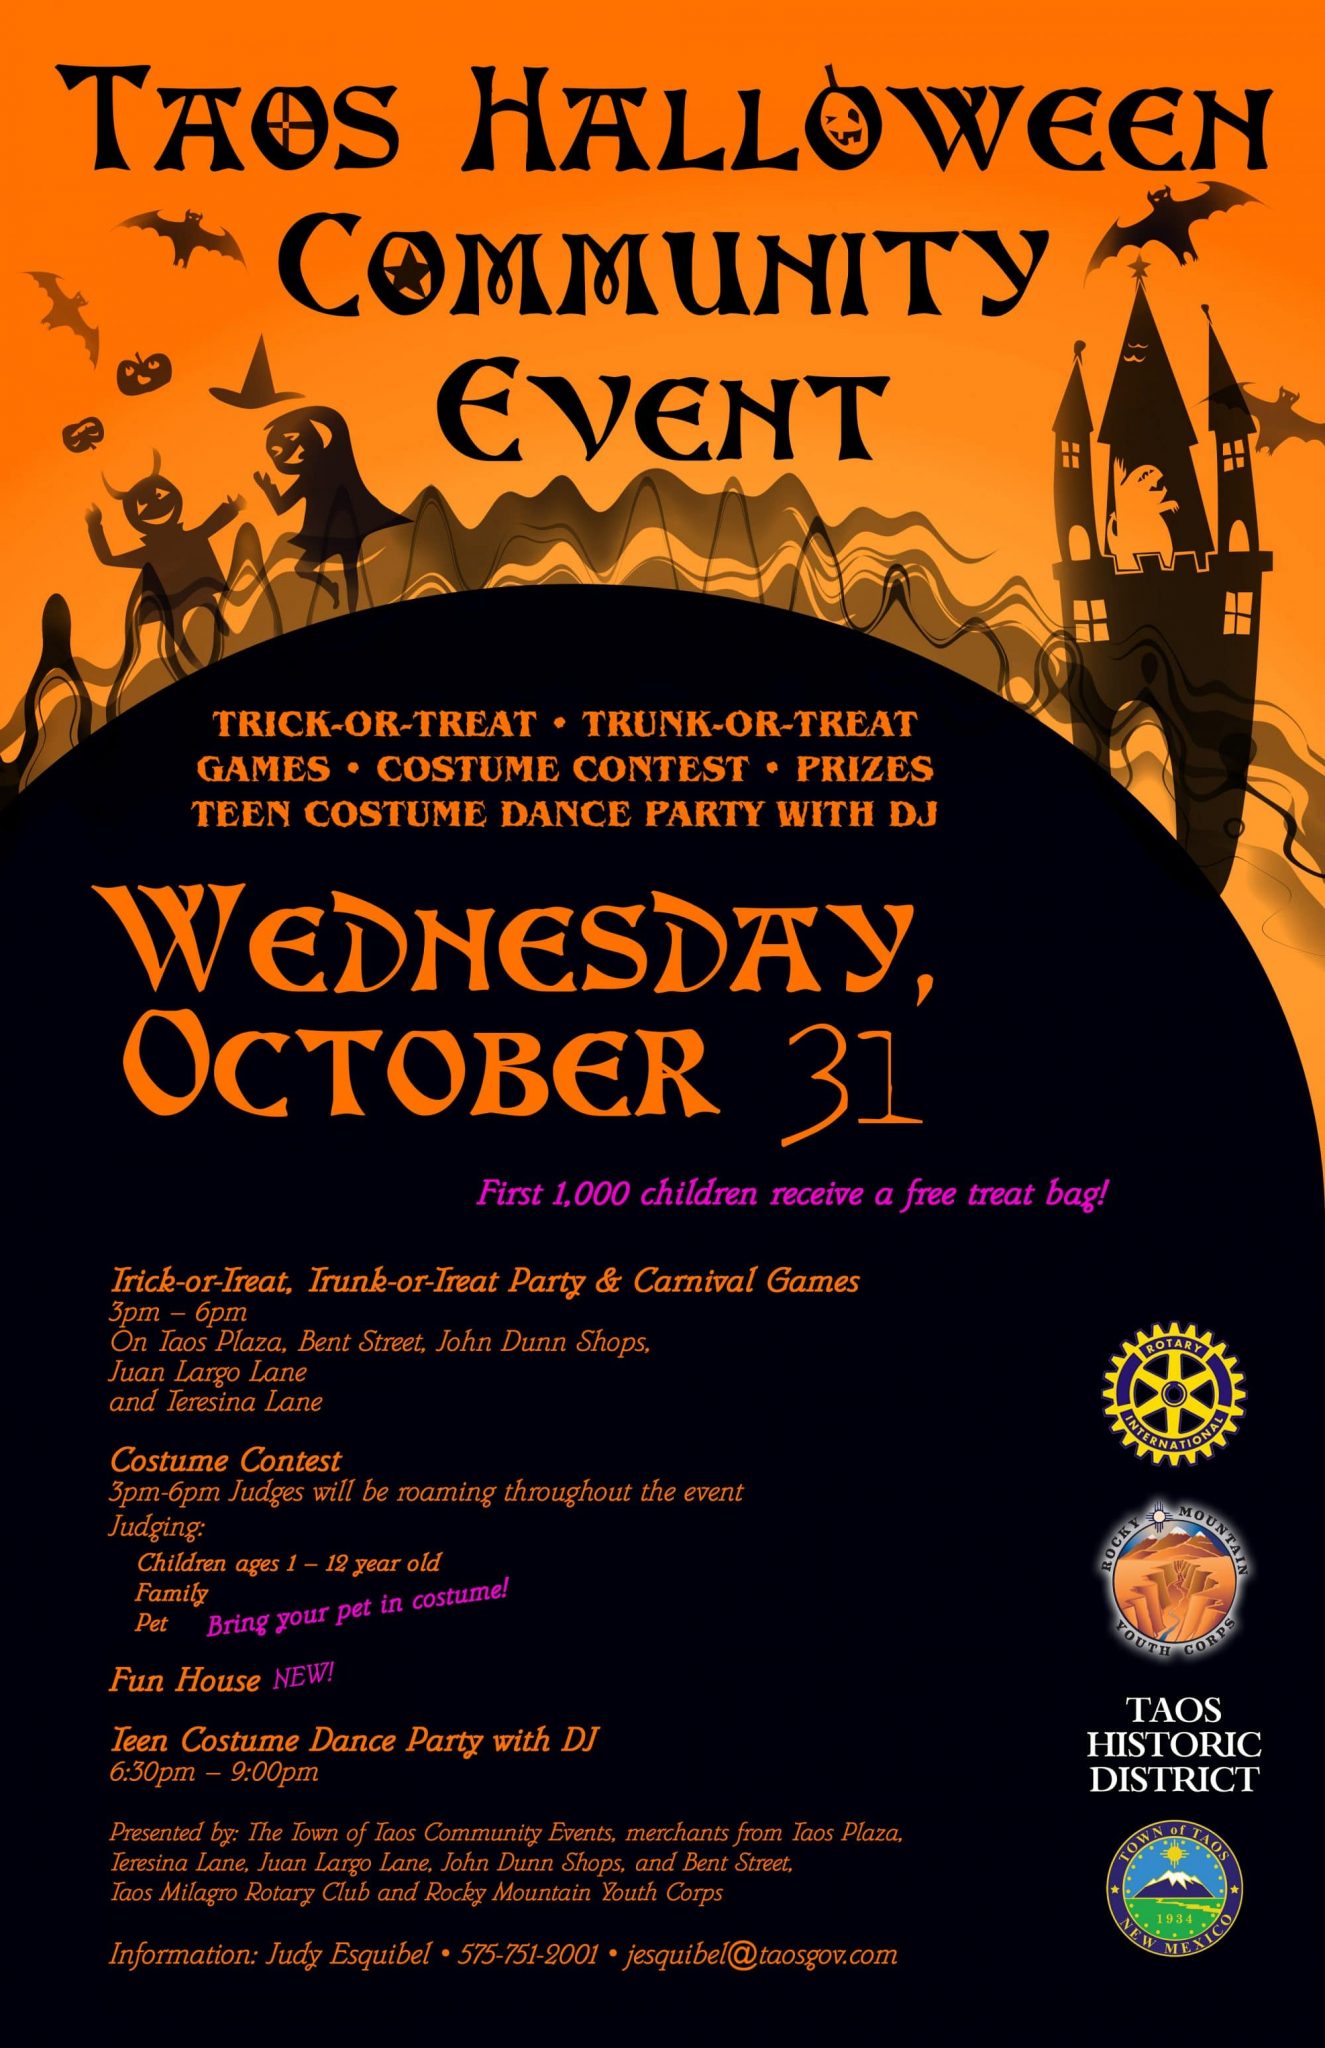 Taos Halloween Community Event - Live Taos Events Calendar